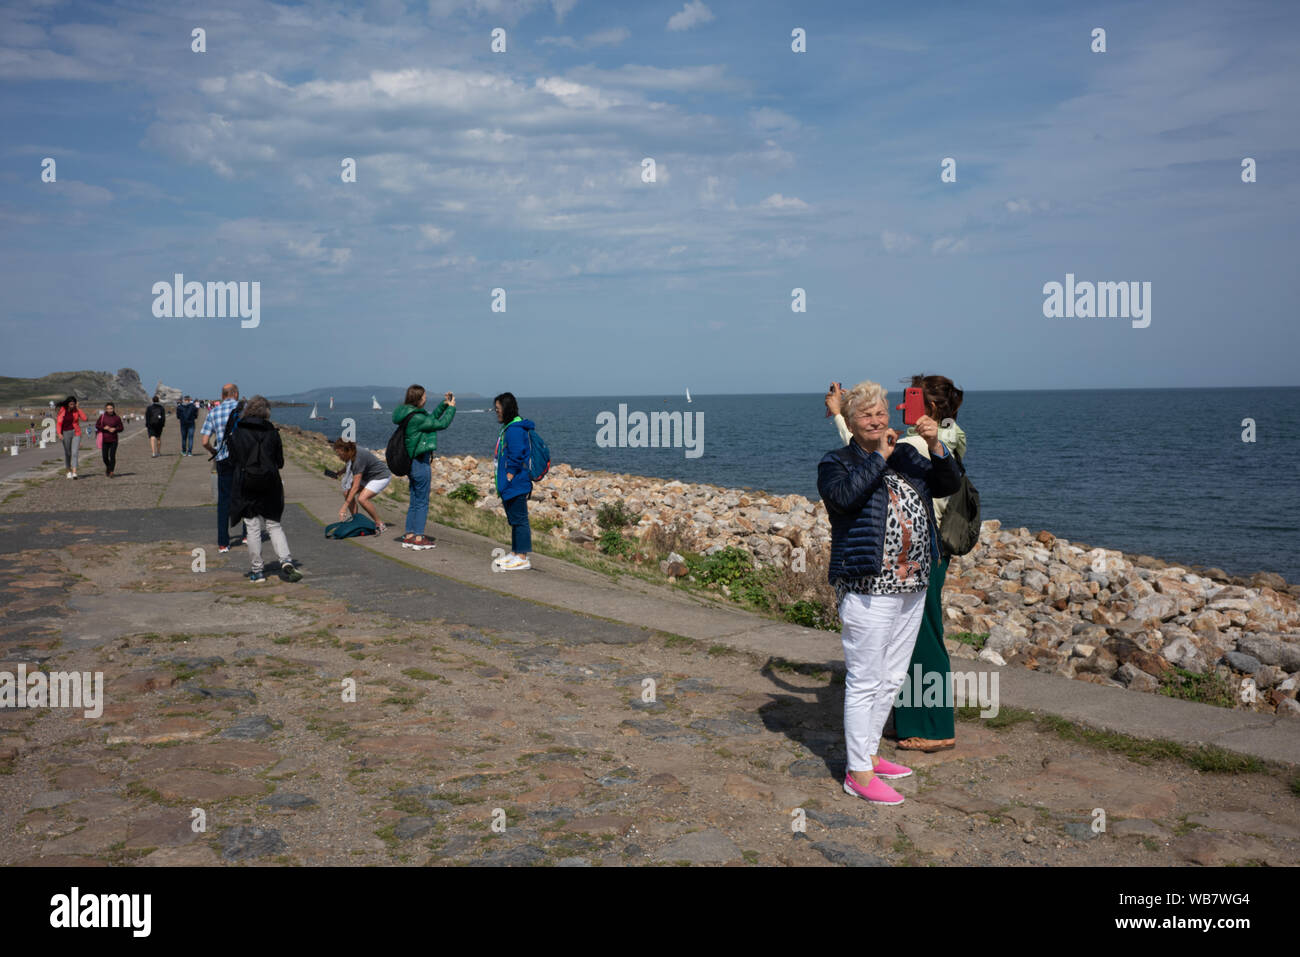 People taking photos on Howth pier, Dublin city, Ireland. Stock Photo